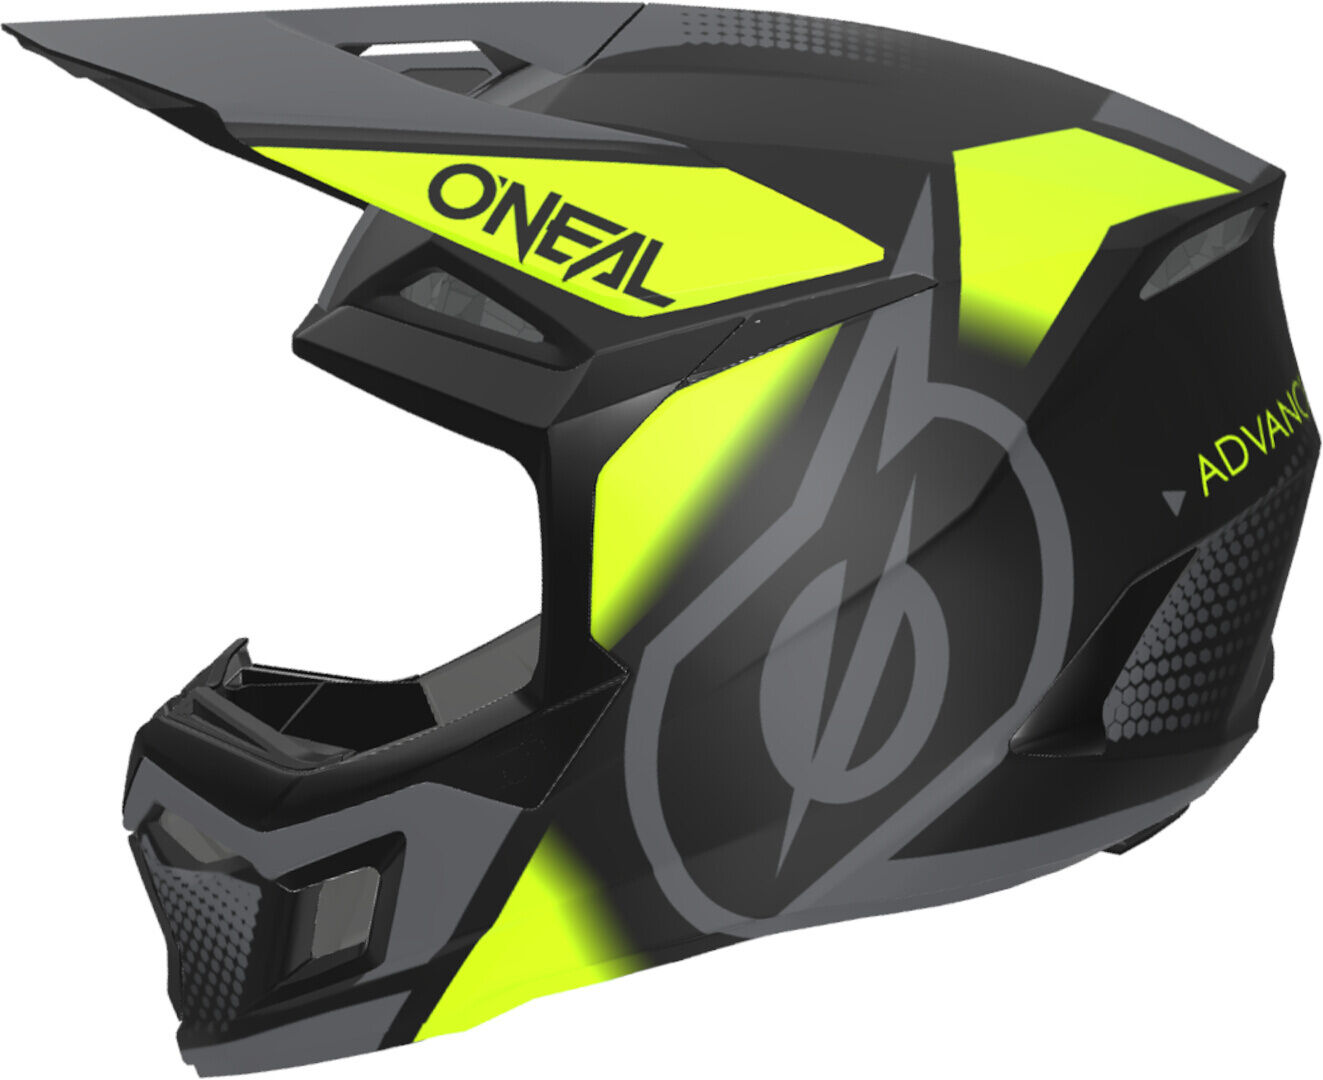 Oneal 3SRS Vision Casco de motocross - Negro Amarillo (L)